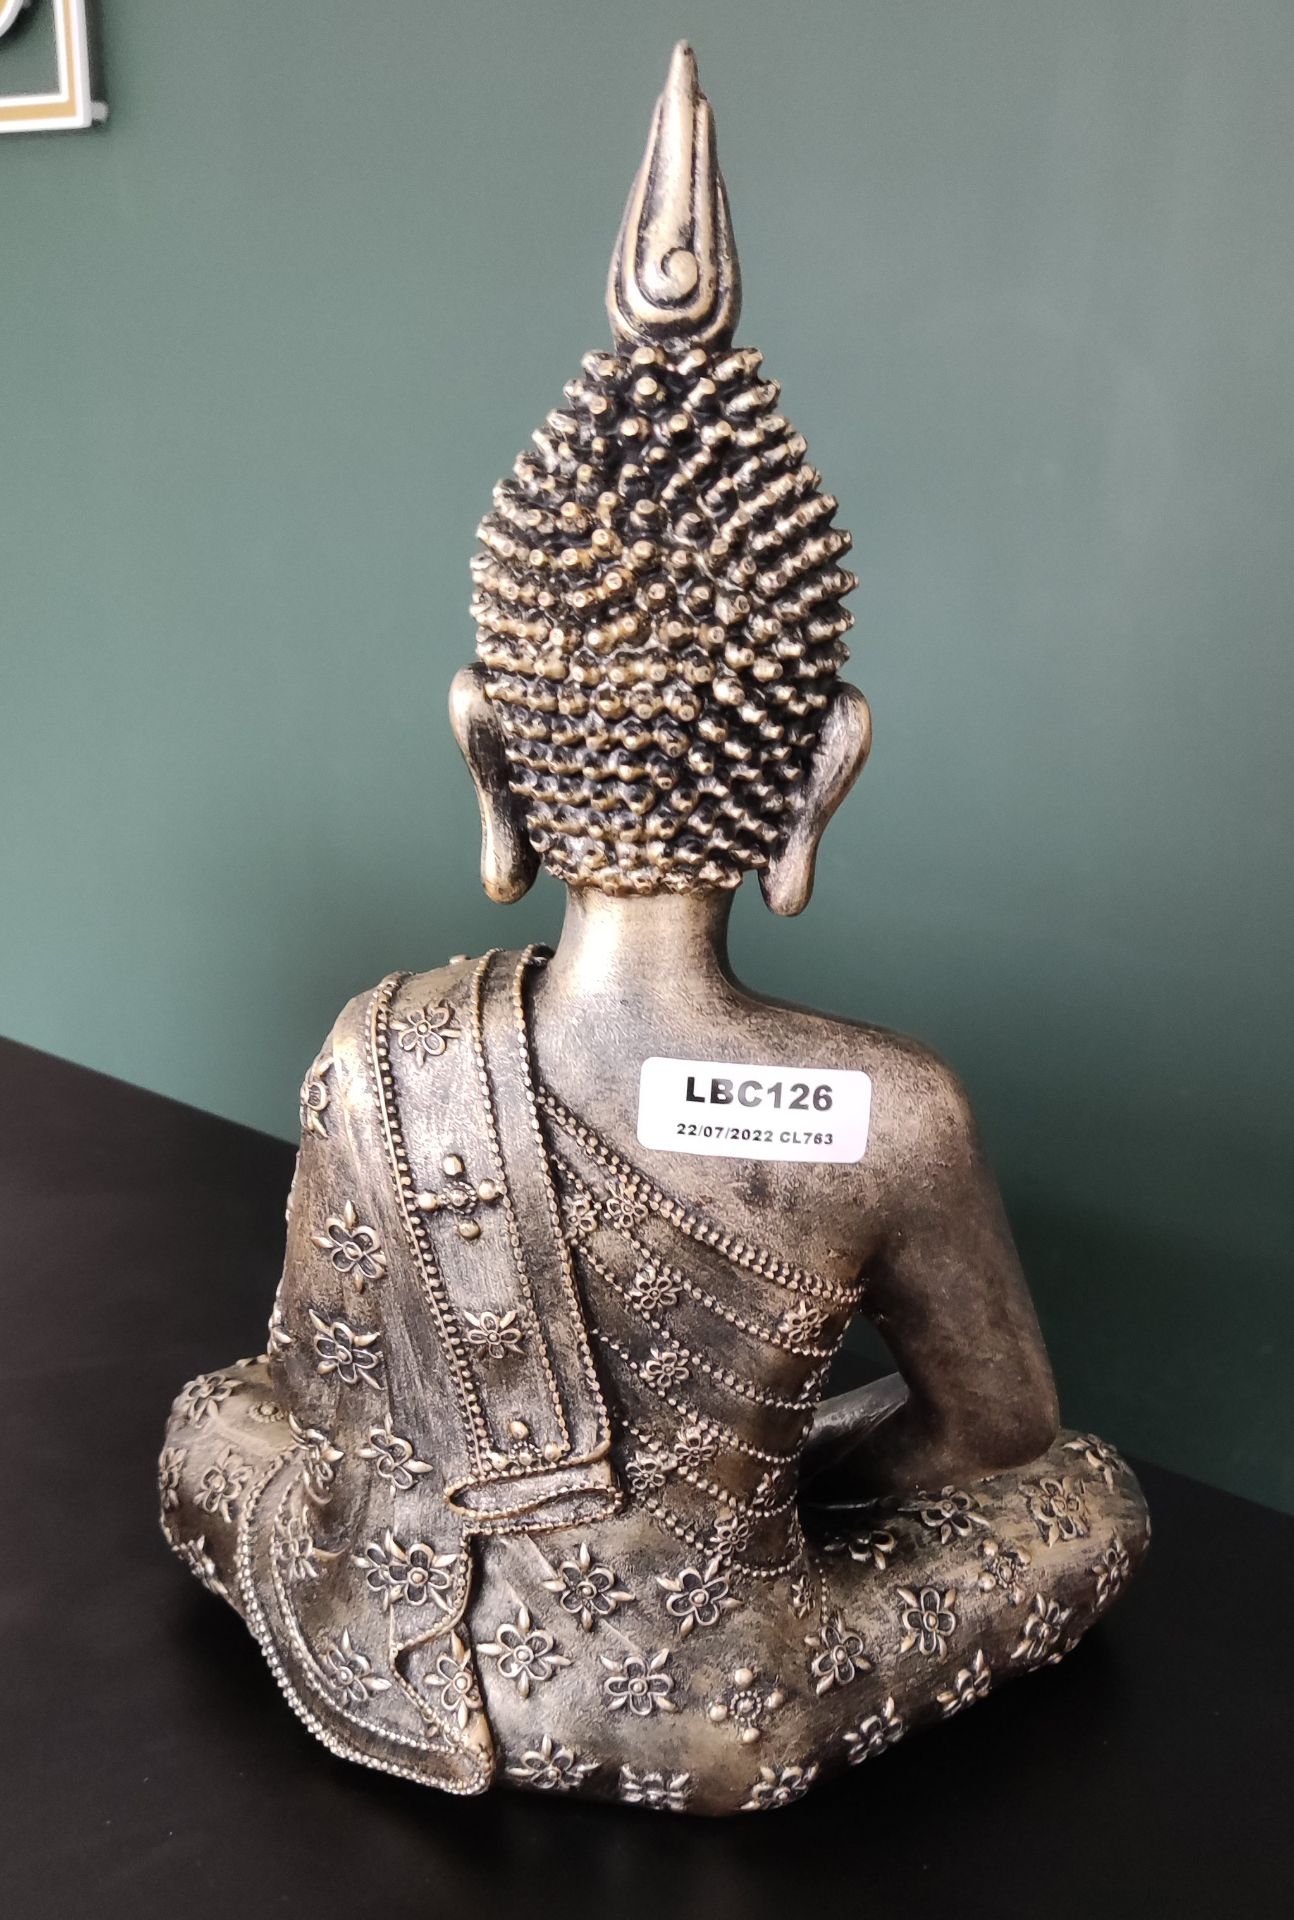 1 x Buddha Statue - LBC126 - CL763- Location: Sale M33Dimensions: 40cm (h)This item - Image 3 of 3